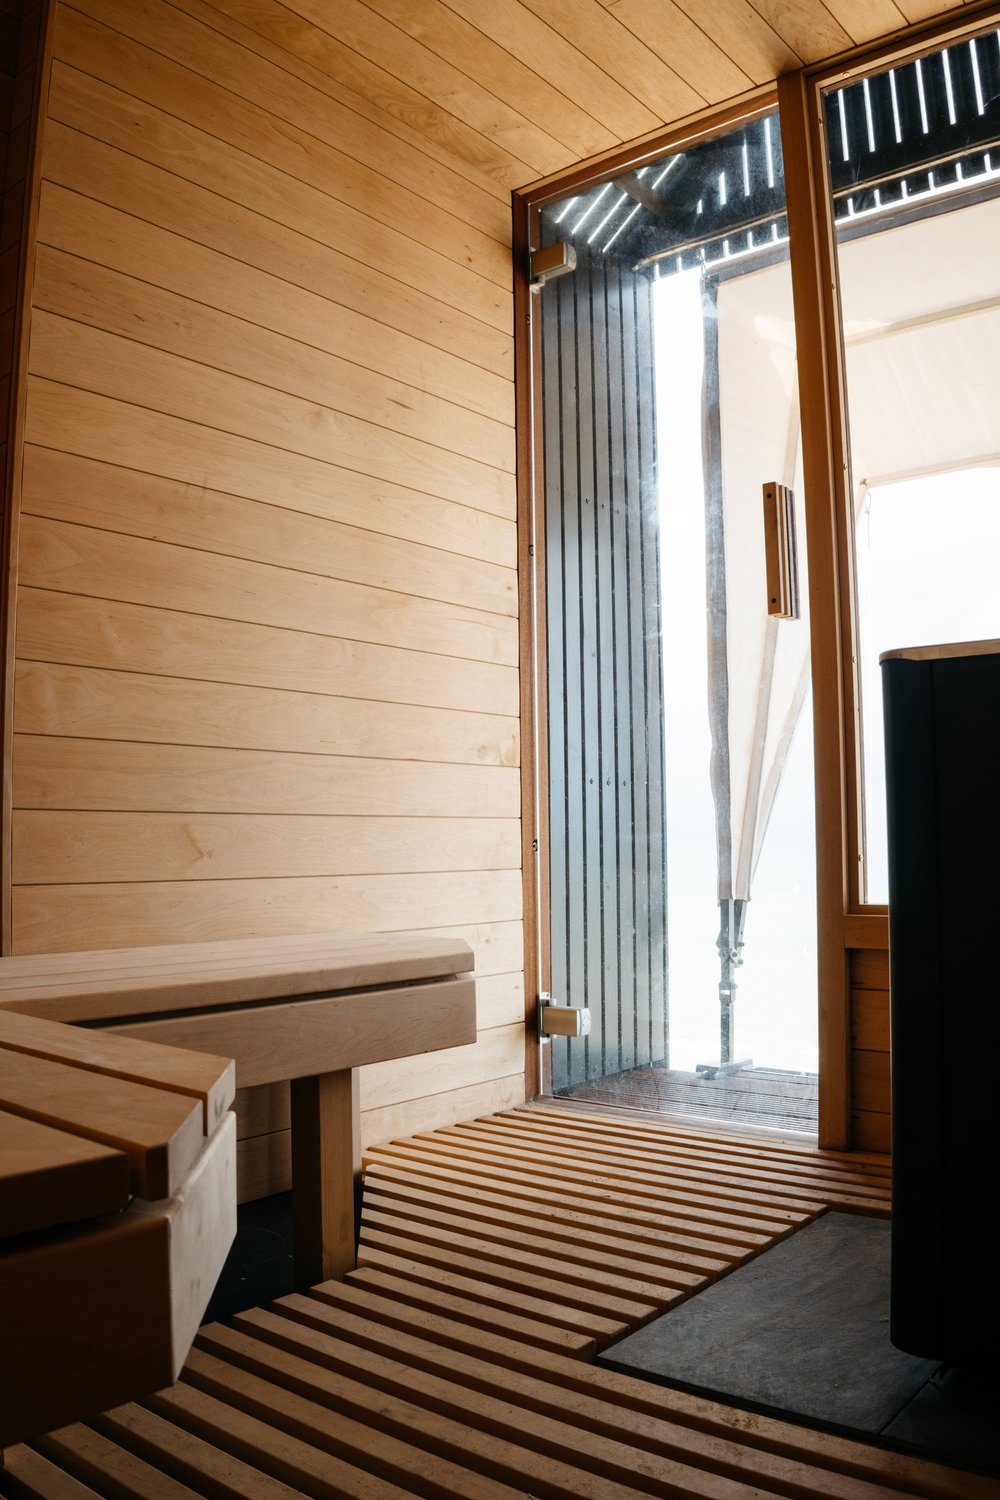 Haeckel's sauna